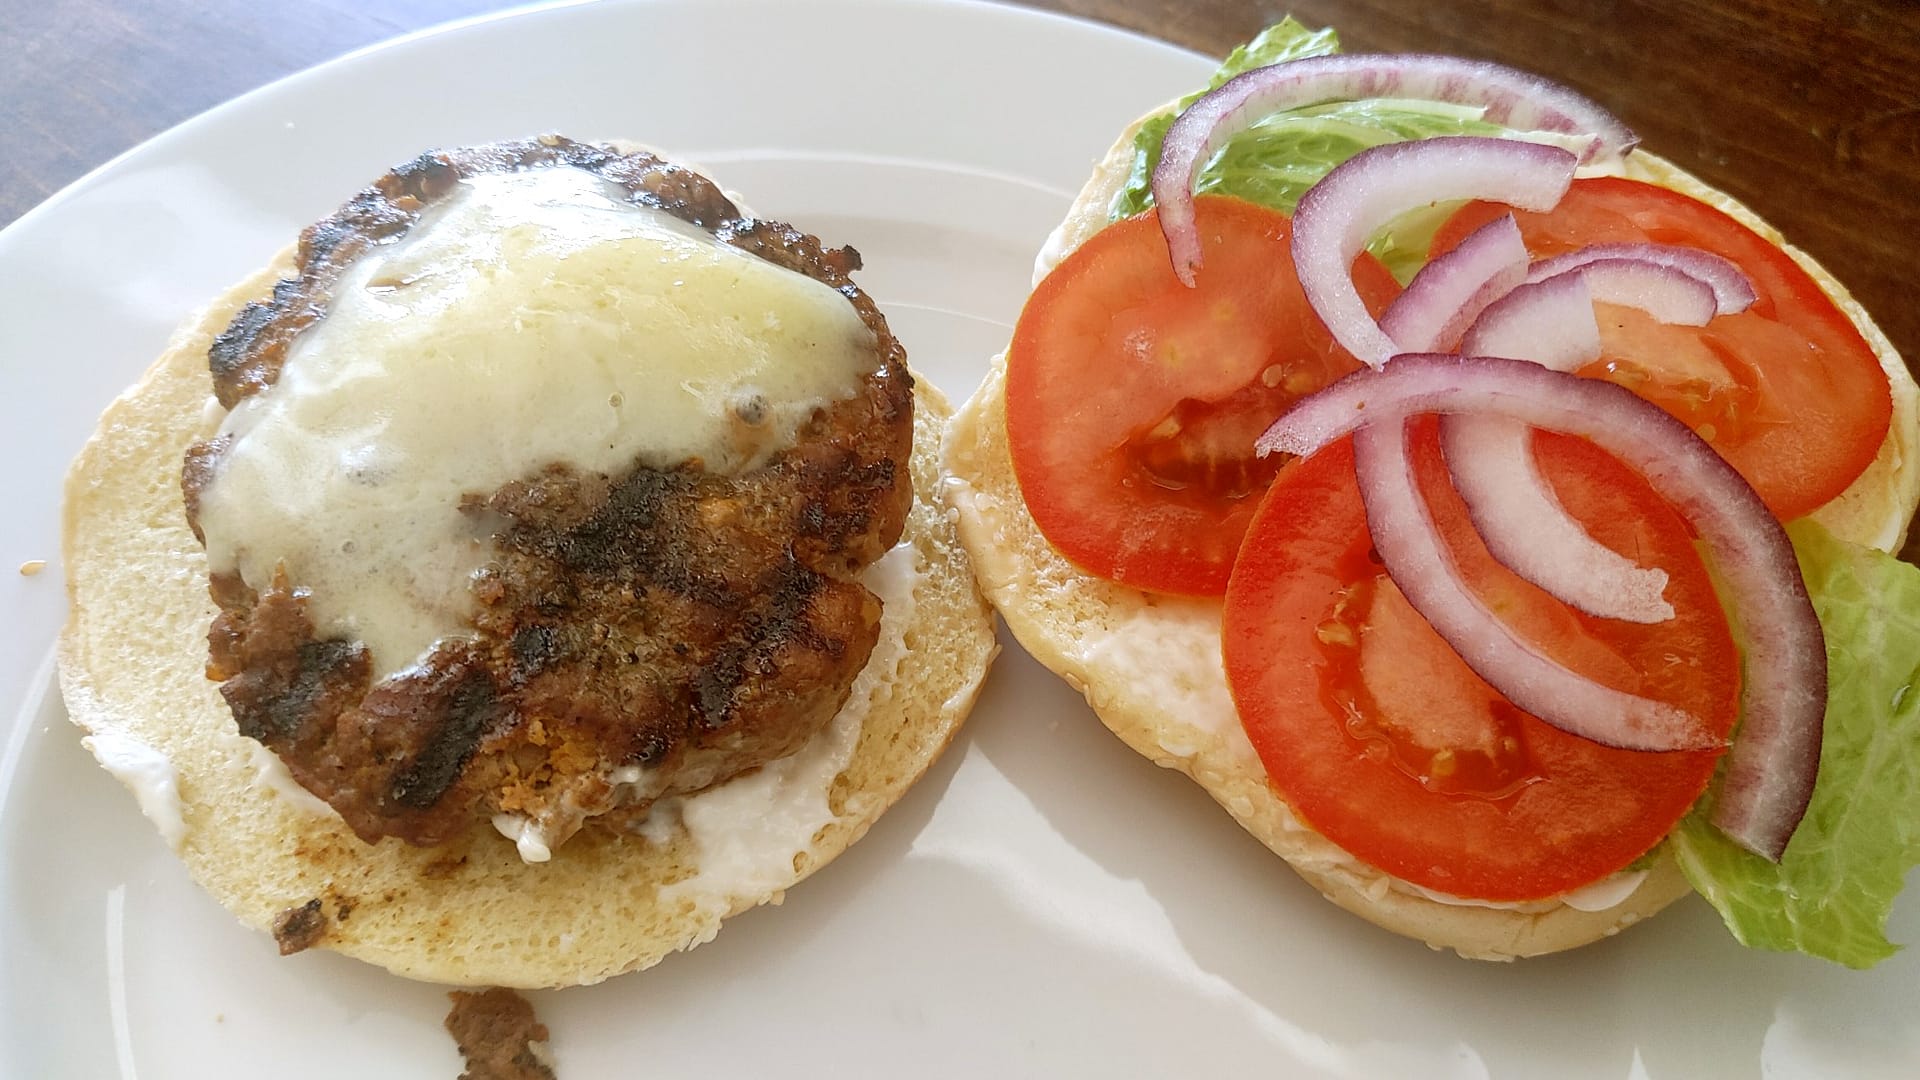 Buy Weber Gourmet Burger Seasoning - it's vegetarian, pescatarian